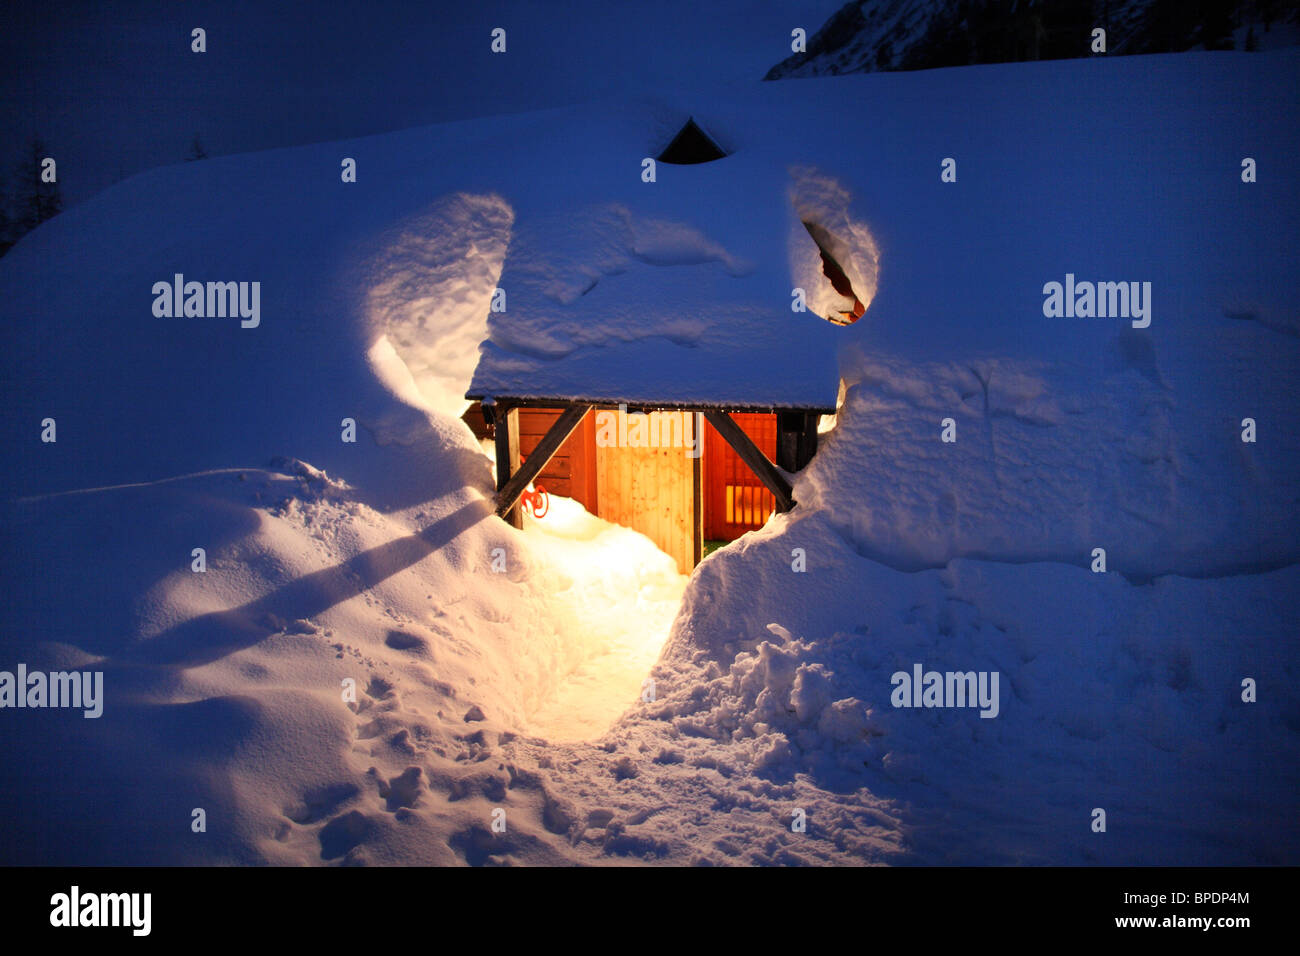 Wooden hut under masses of snow, Krippenbrunn, Austria Stock Photo